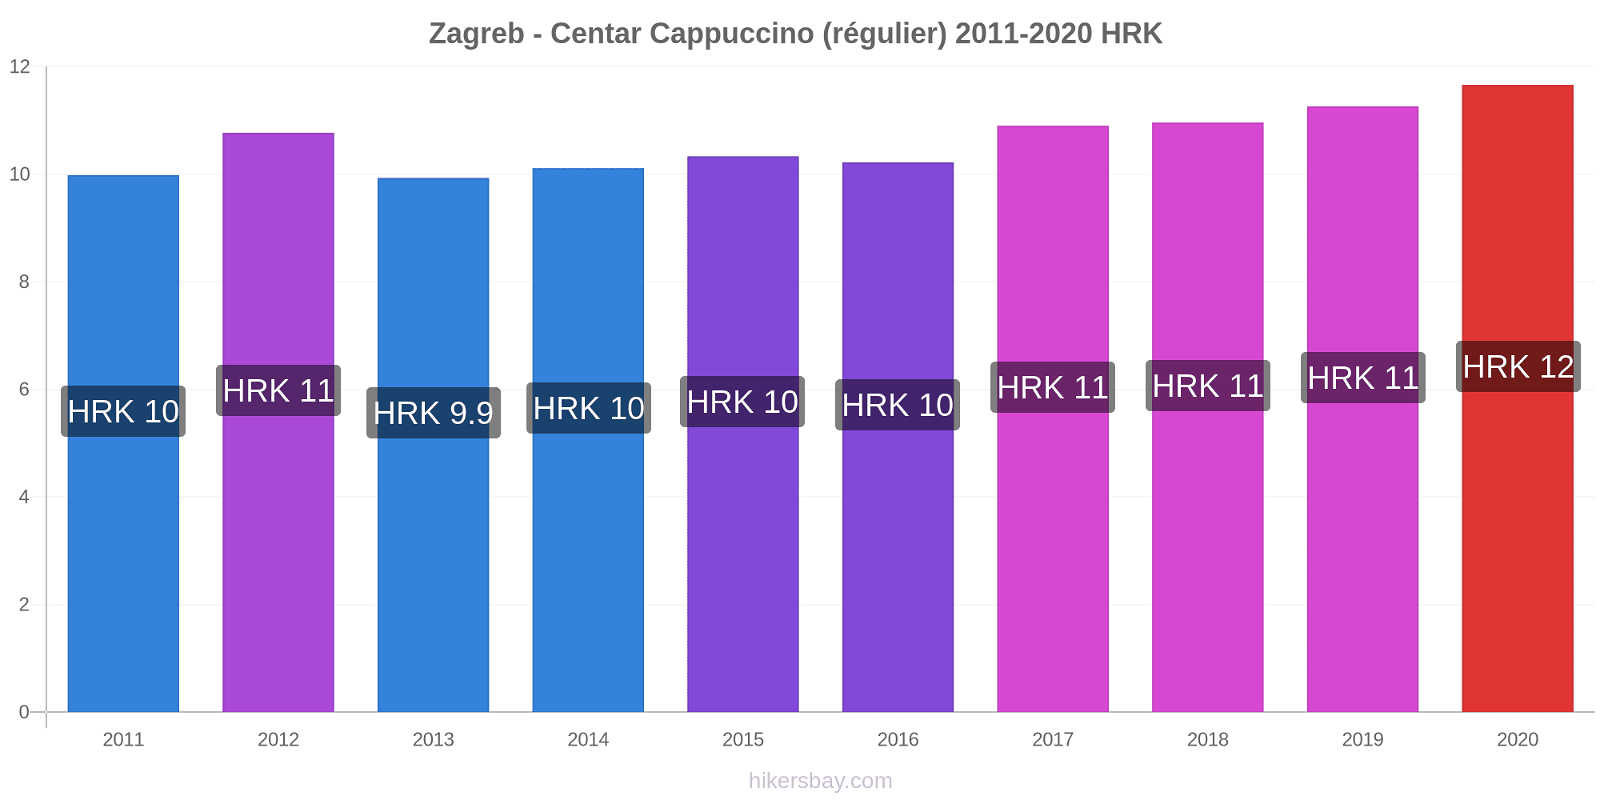 Zagreb - Centar changements de prix Cappuccino (régulier) hikersbay.com